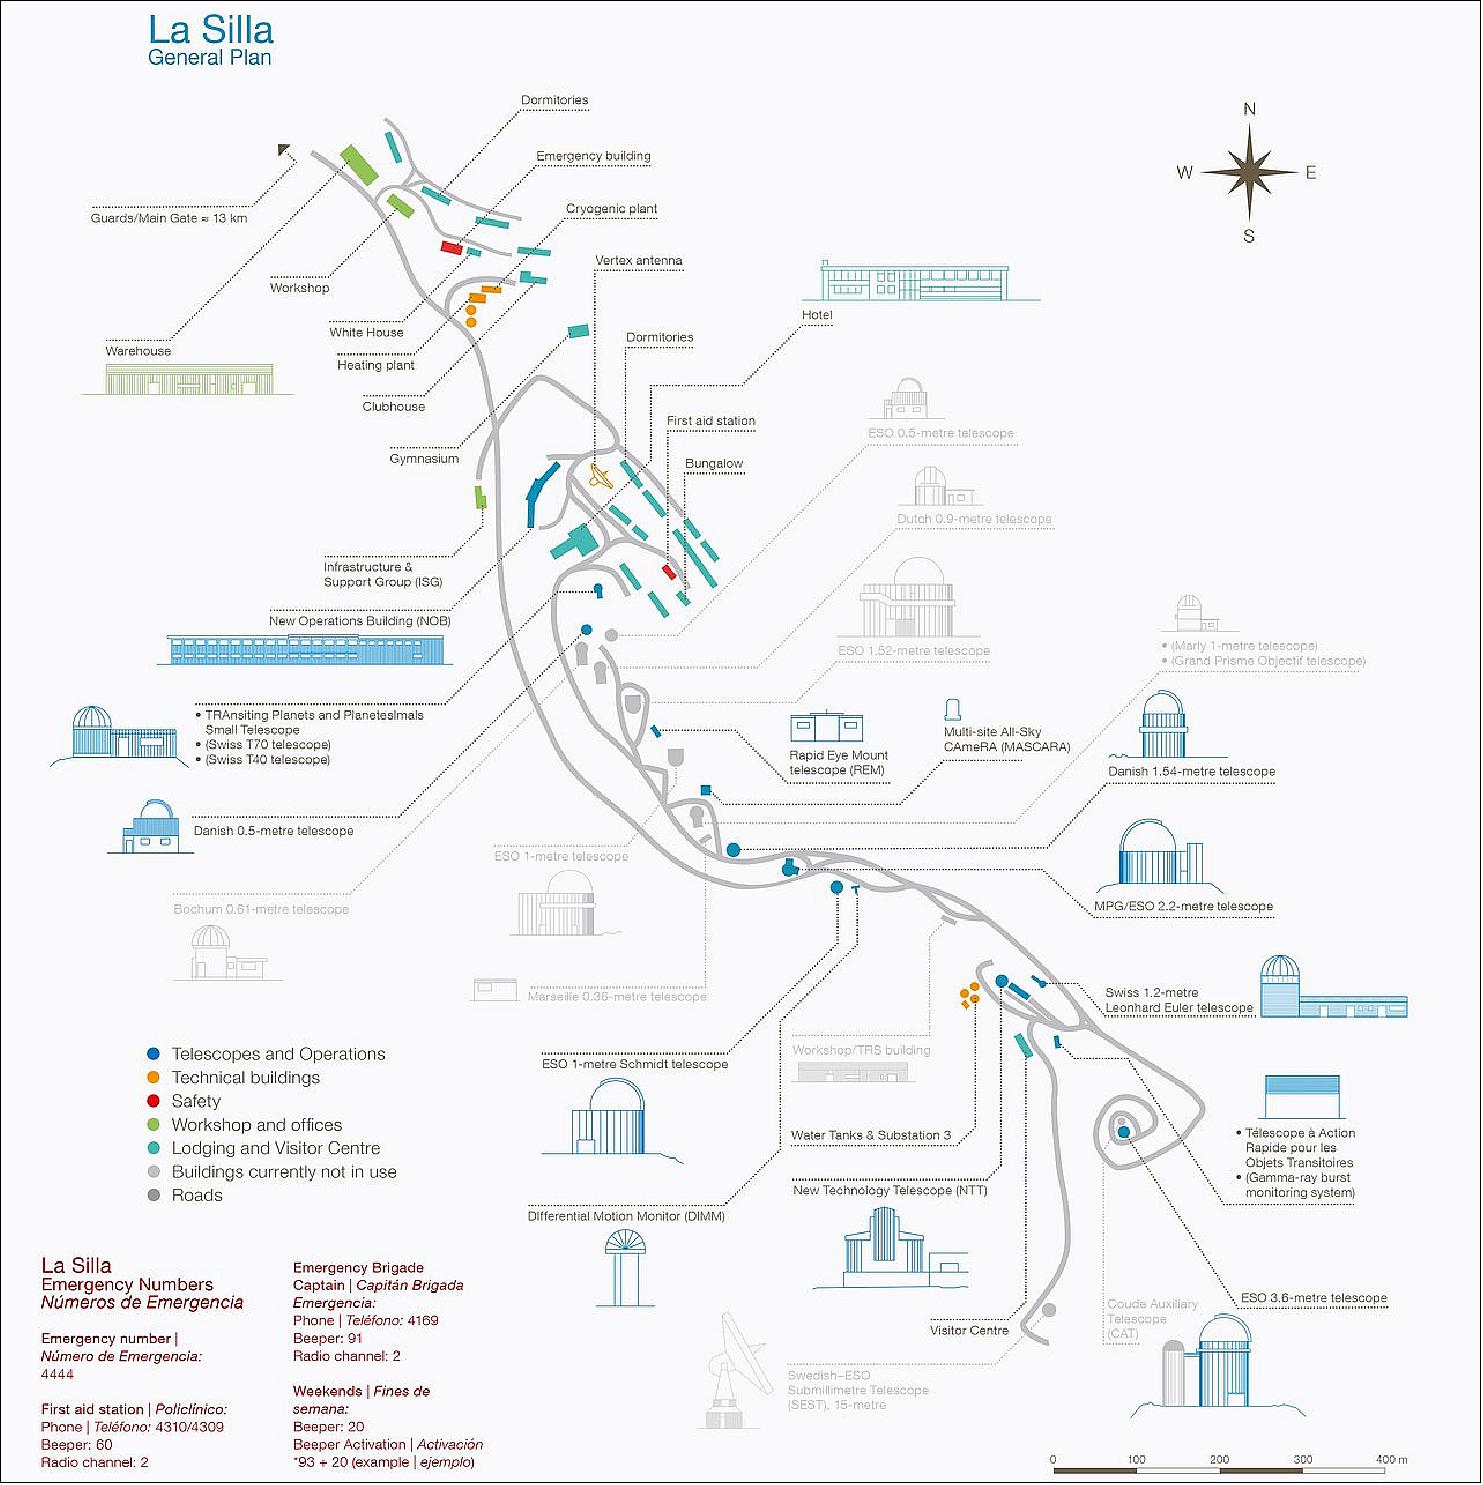 Figure 3: La Silla Map and Safety (image credit: ESO)